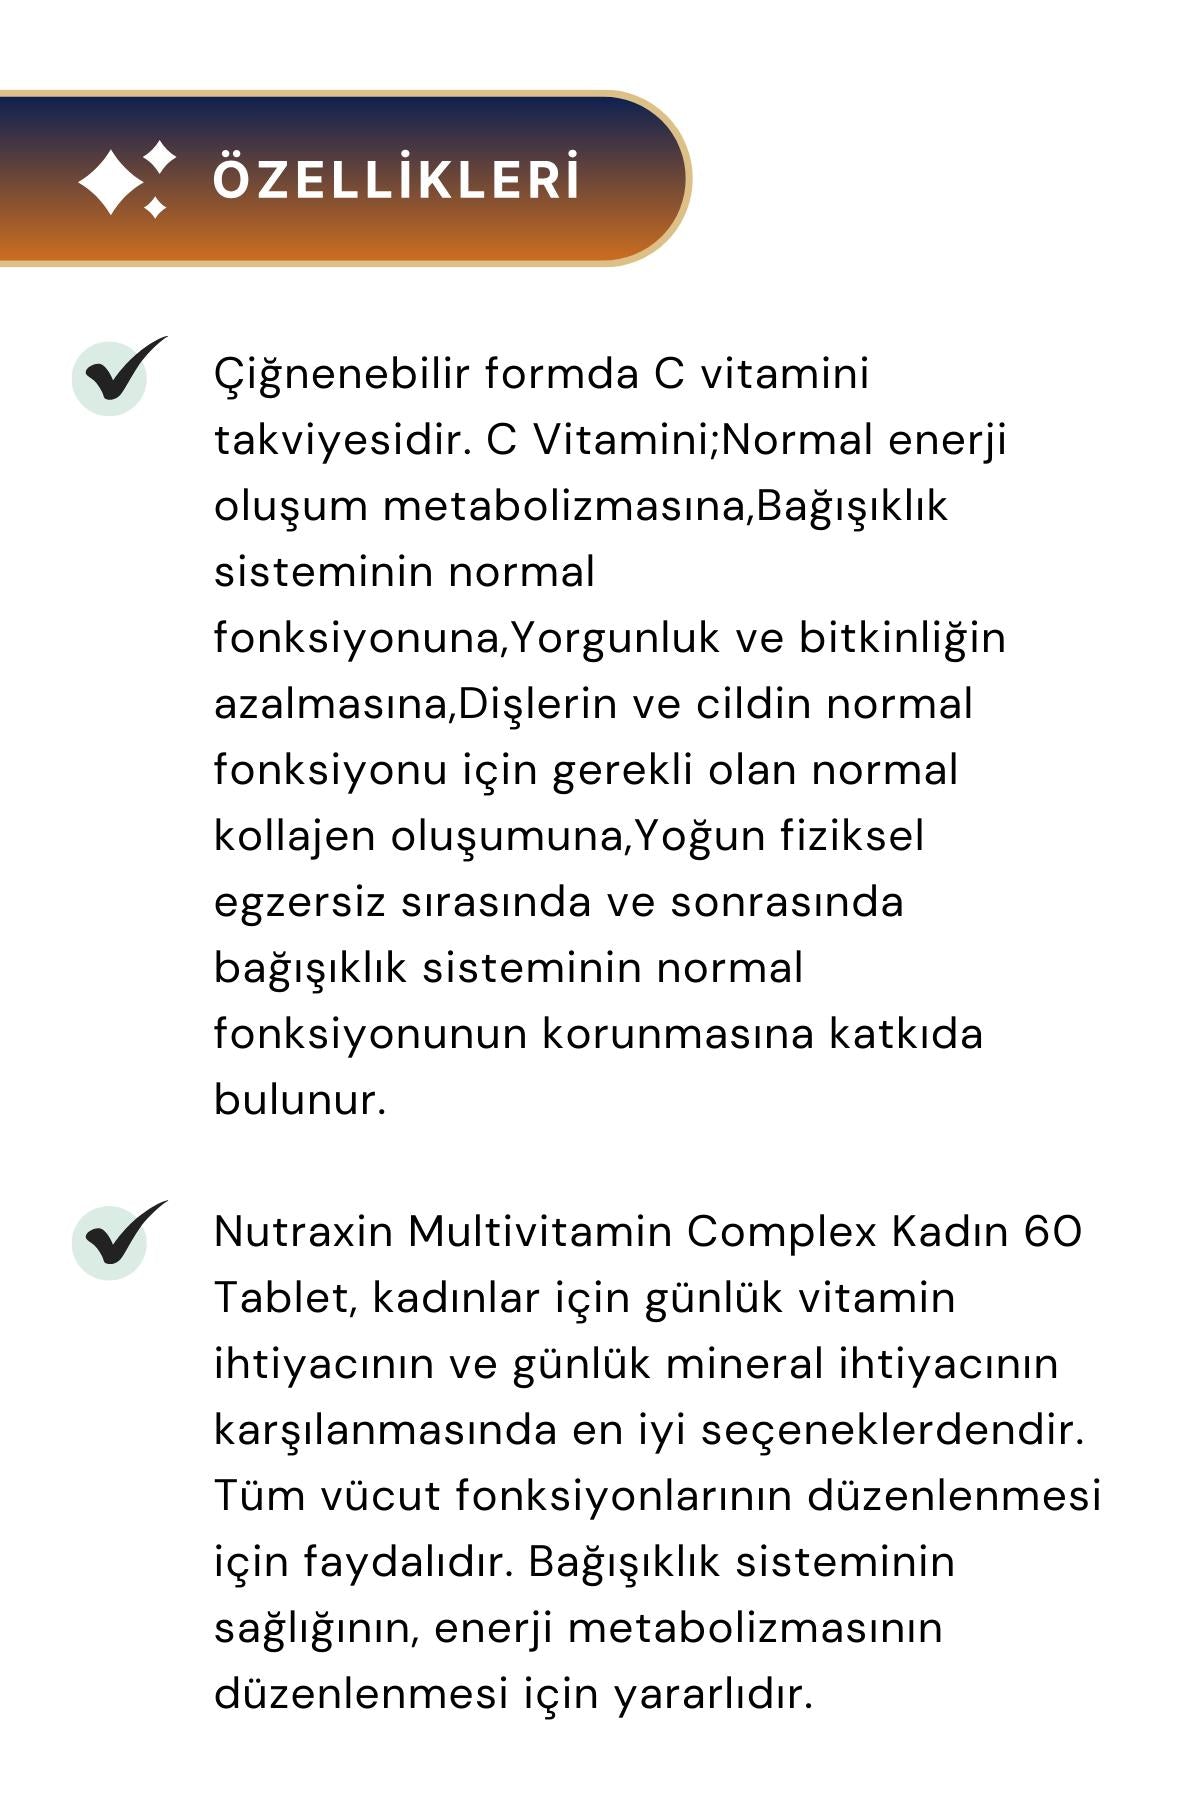 Nutraxin Vitamin C 28 Çiğneme Tableti & Vitals Women's Multivitamin Complex 60 Tablet